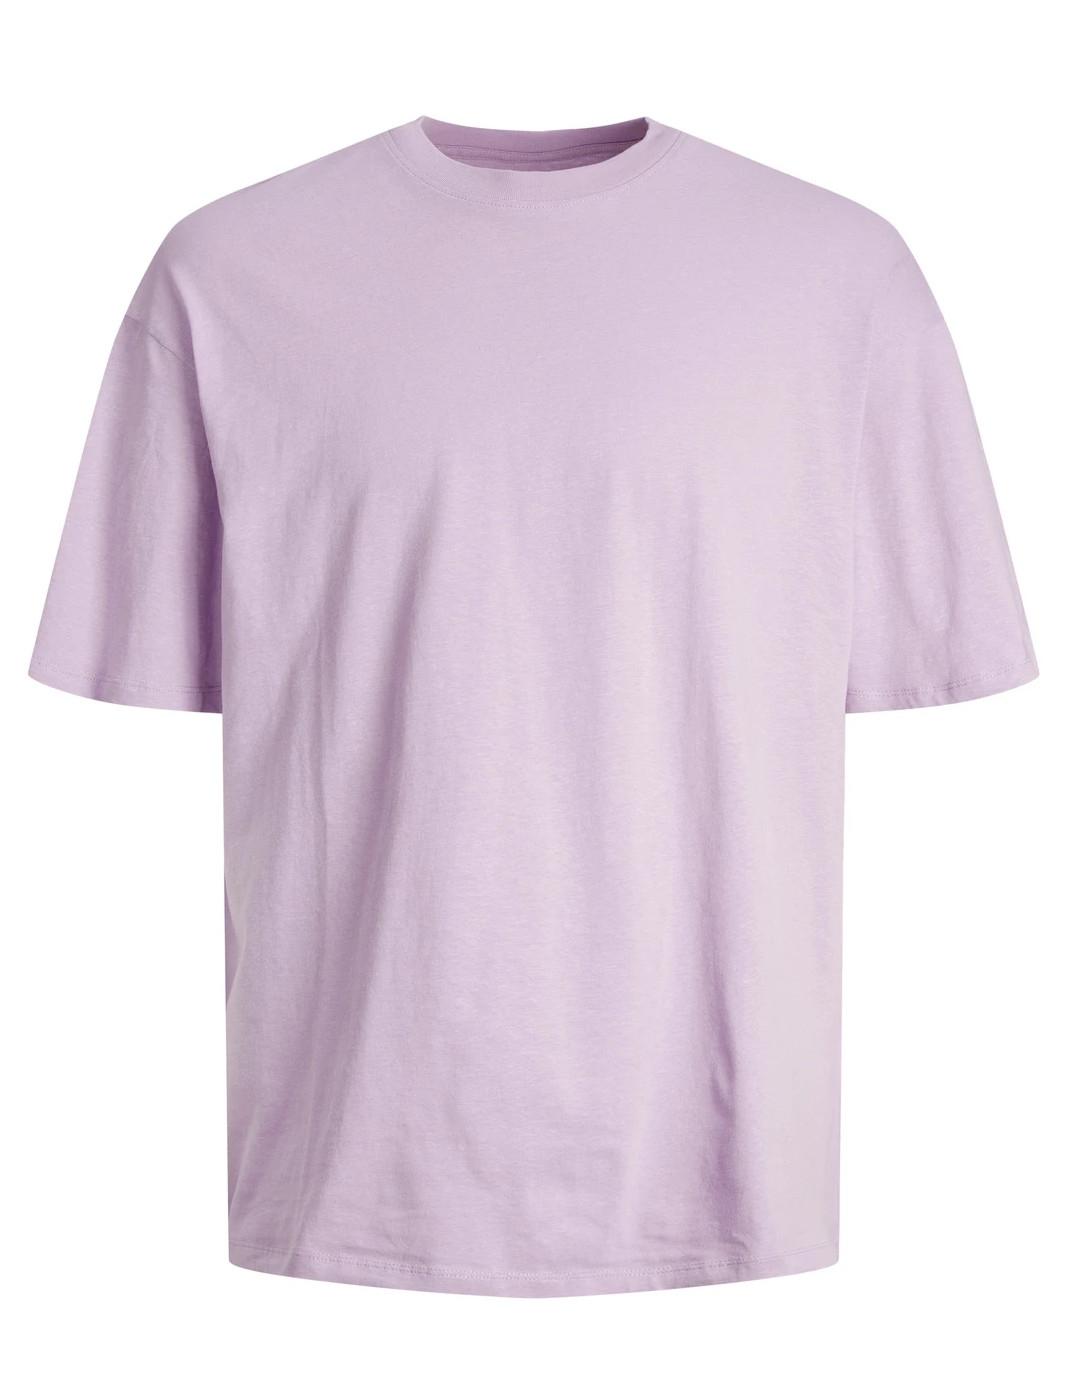 Camiseta Jack&Jones Brandley básica rosa manga corta hombre